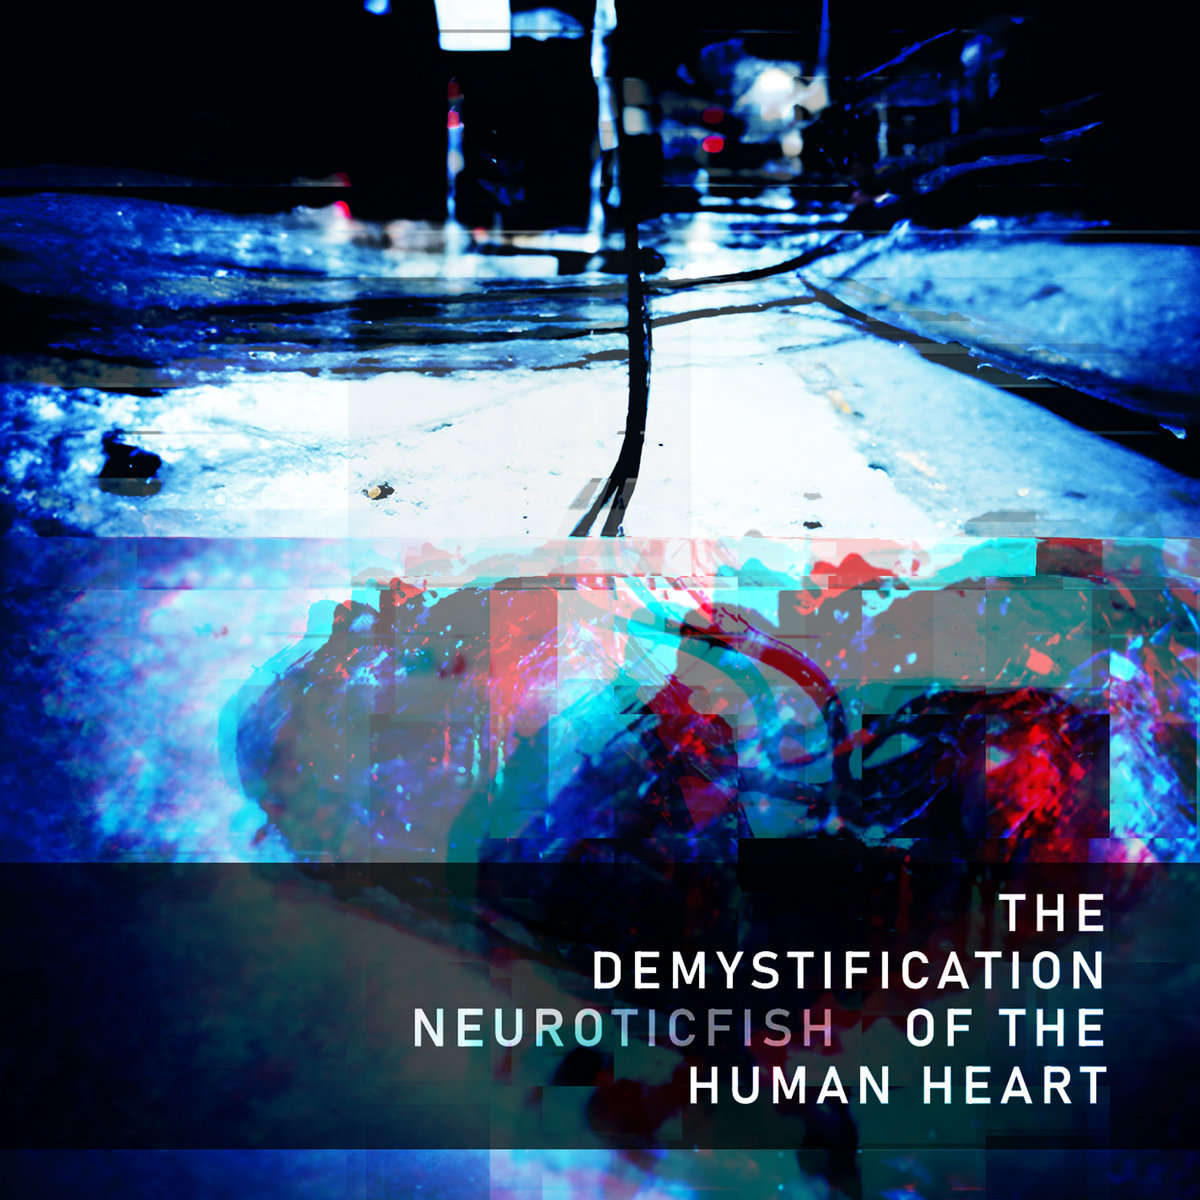 Neuroticfish, “The Demystification of the Human Heart”